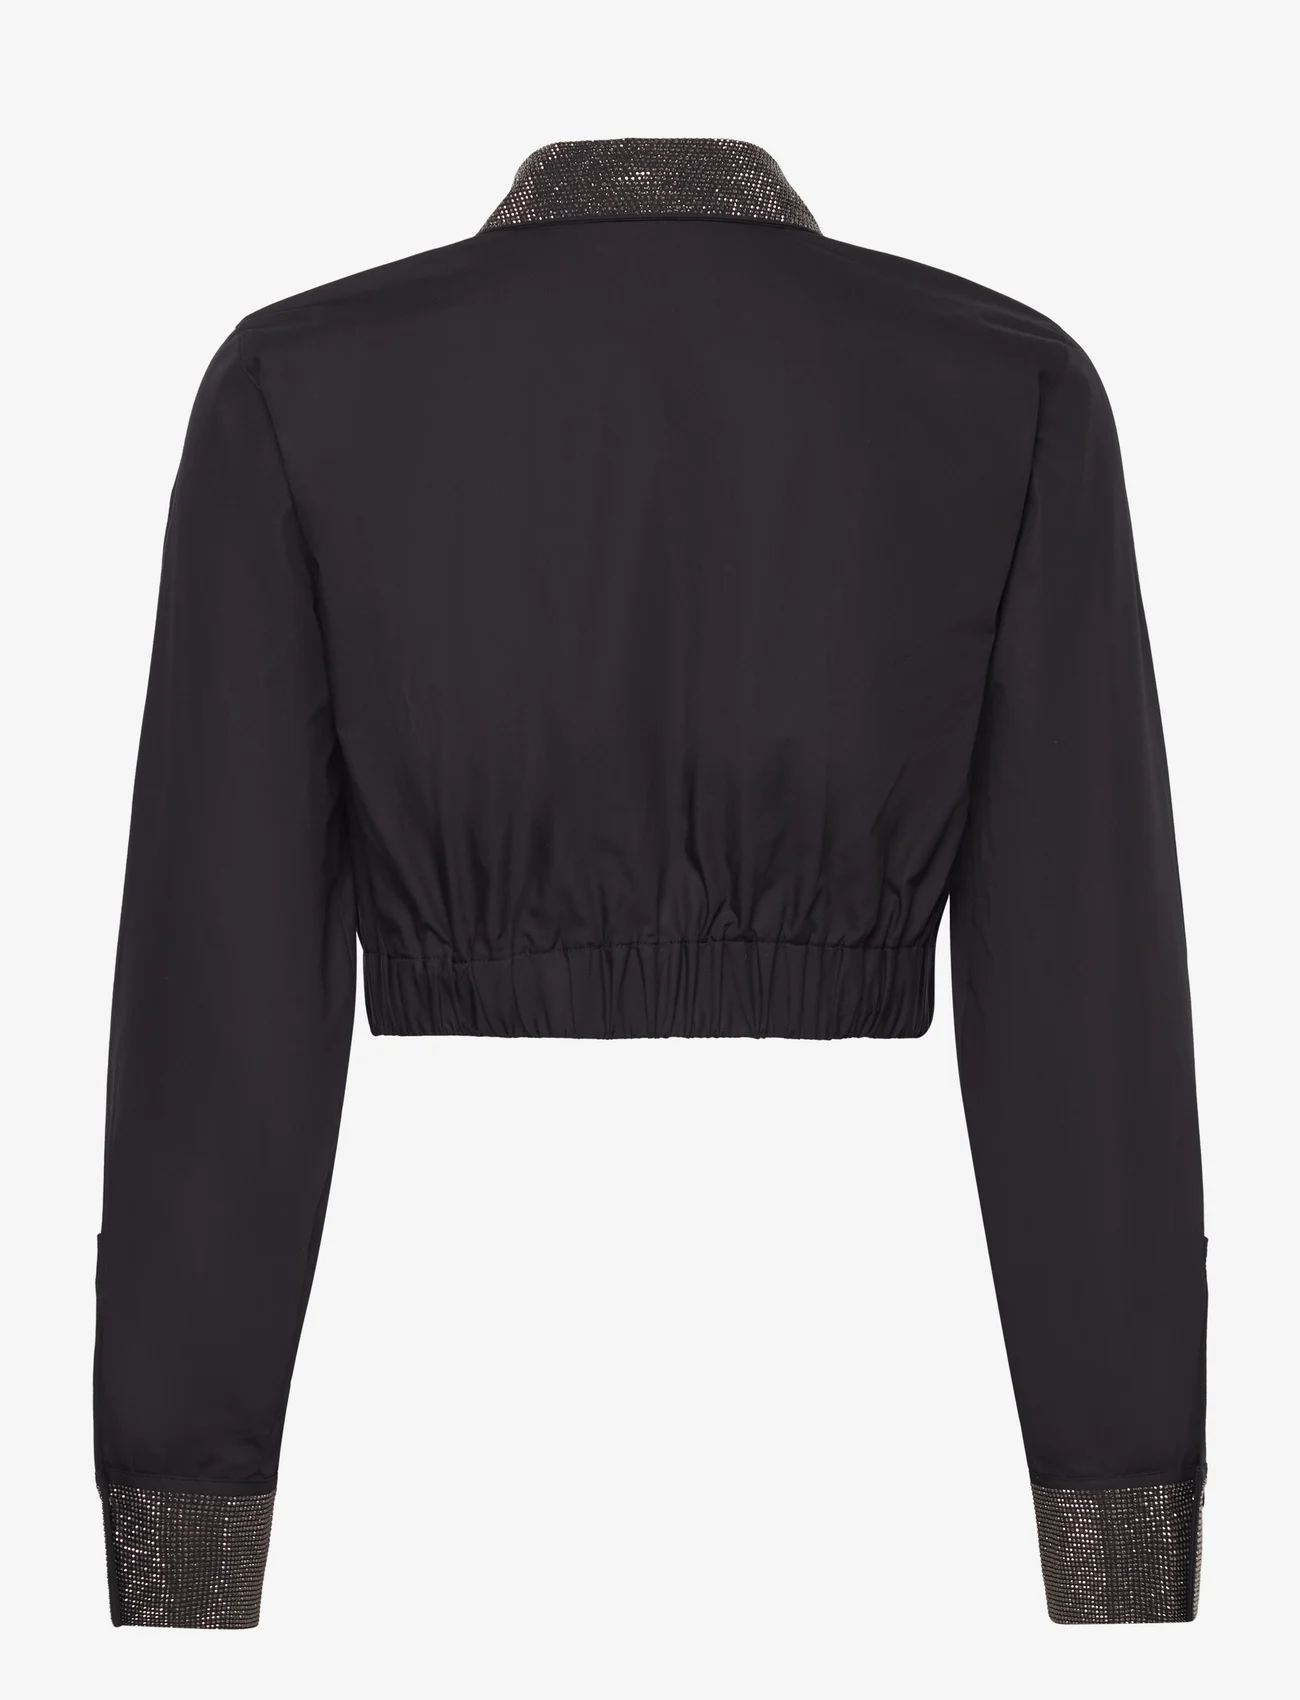 Karl Lagerfeld - rhinestone cropped shirt - langermede skjorter - black - 1